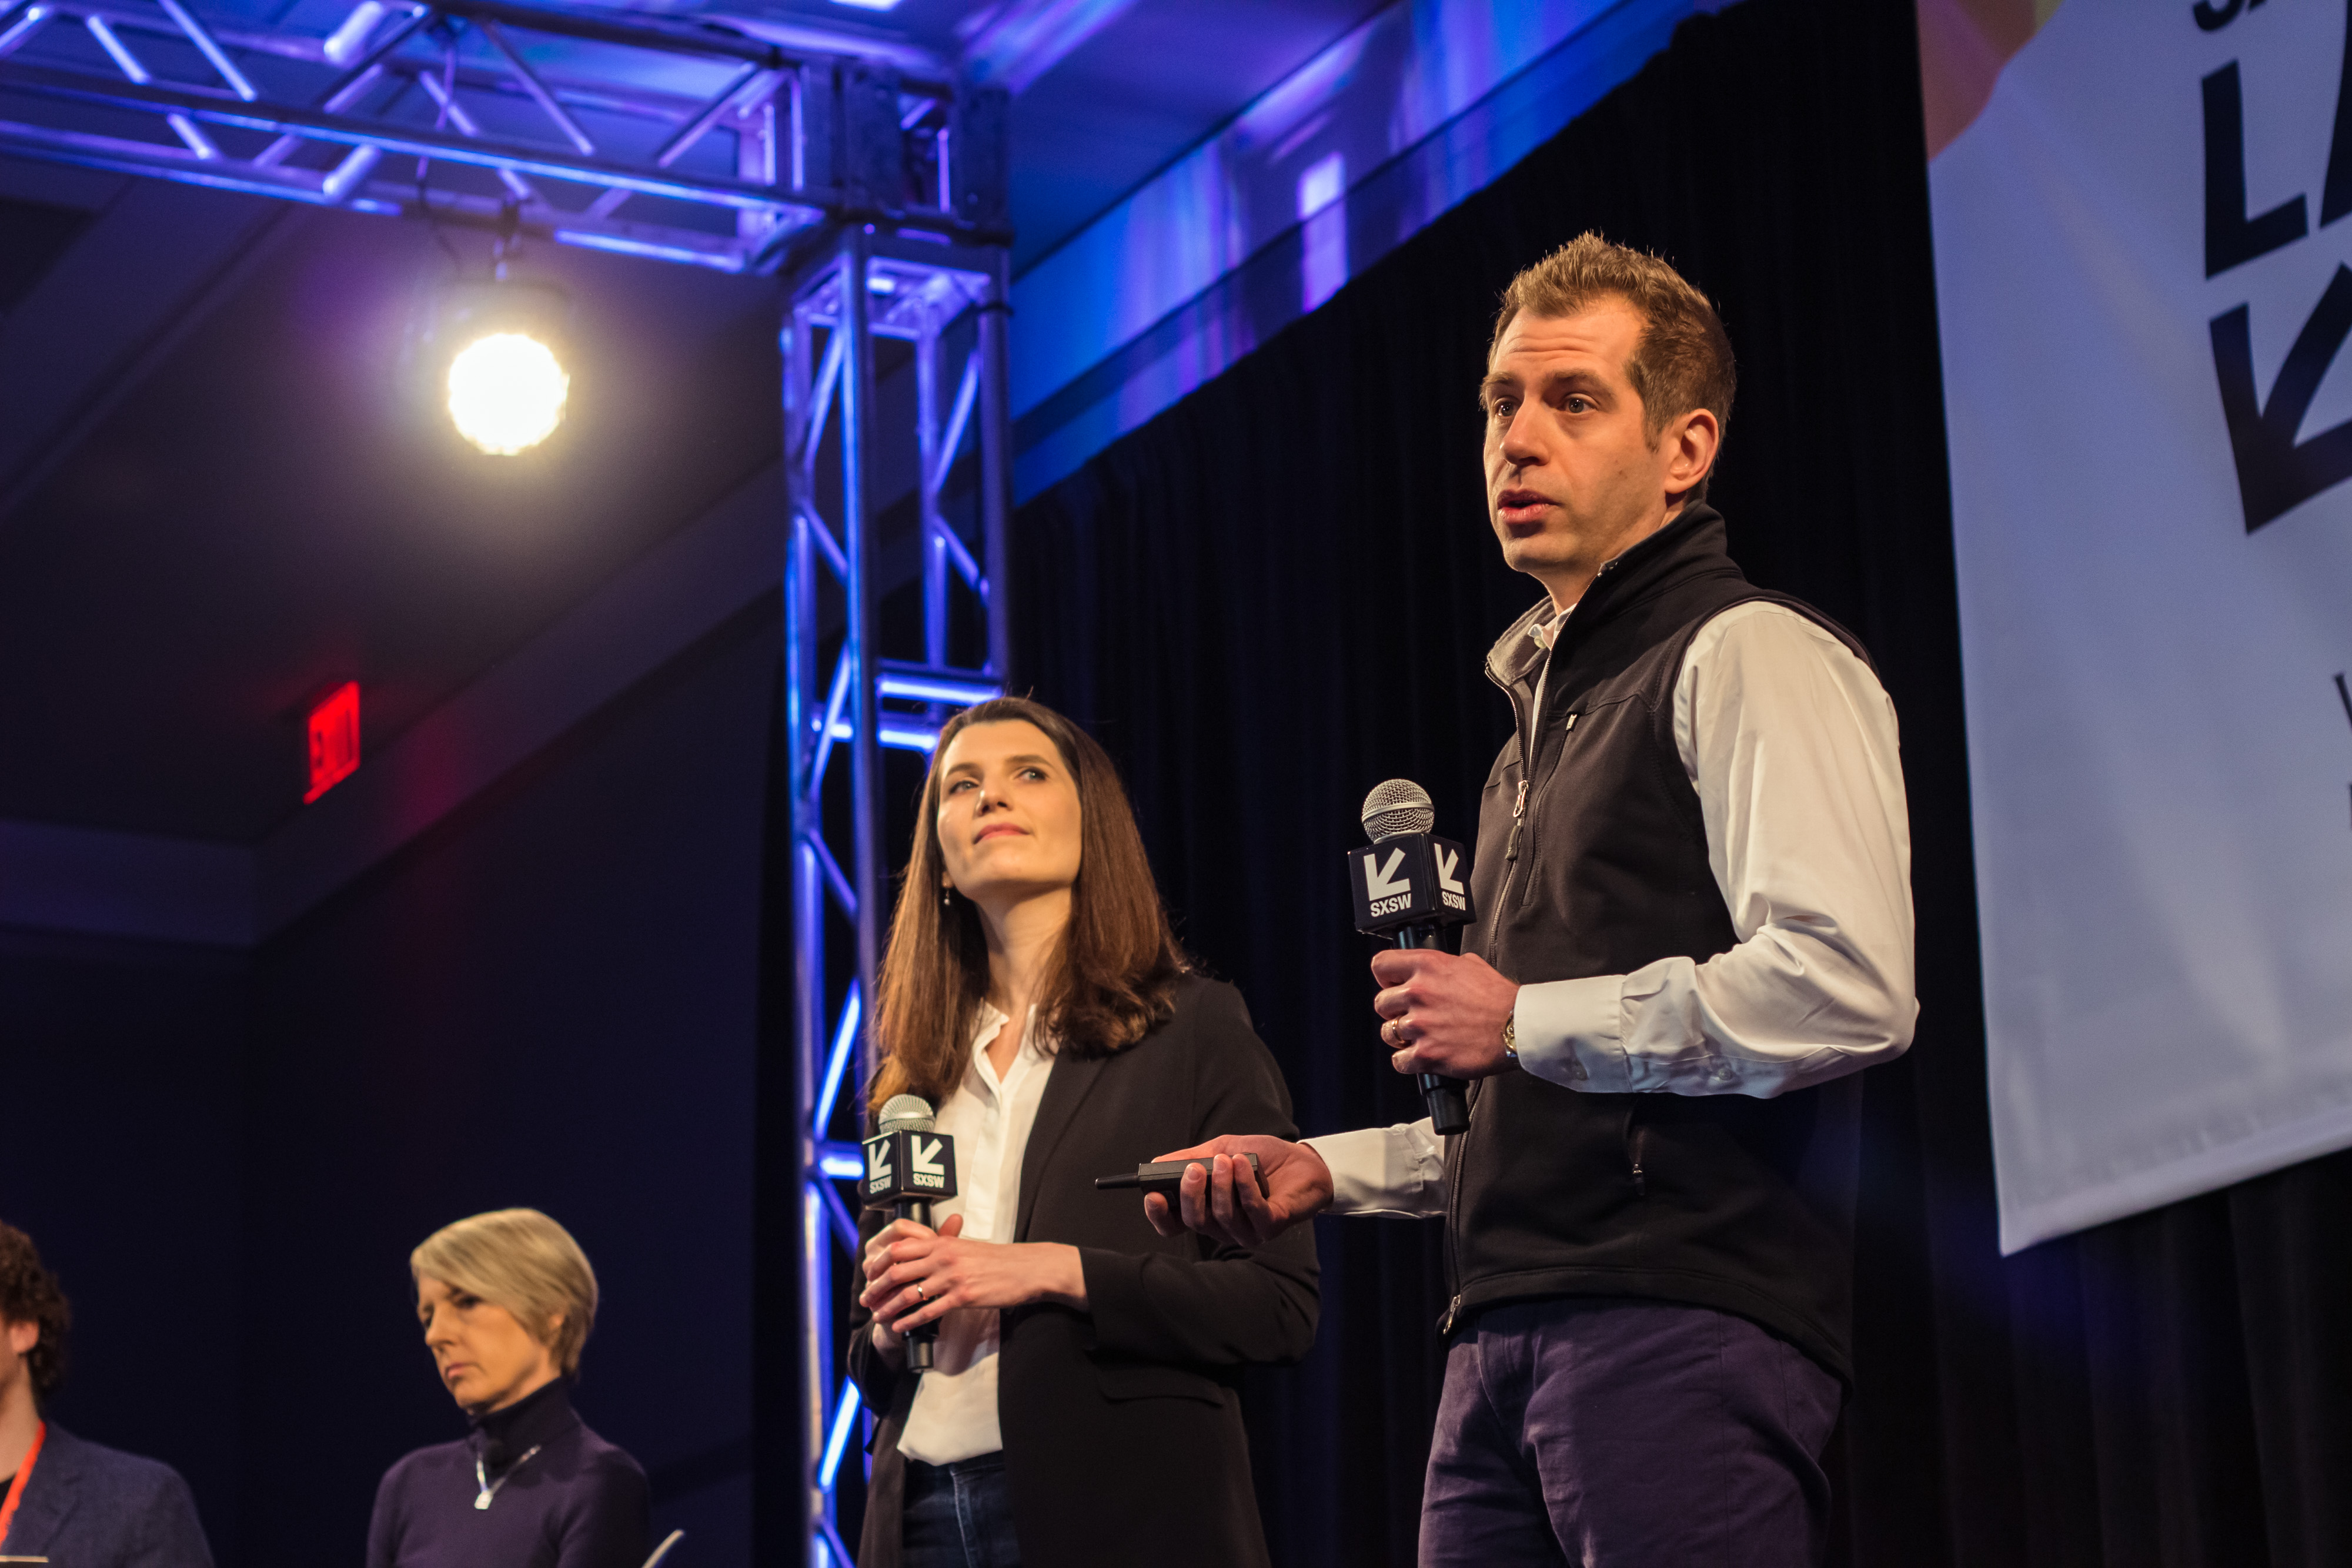 Nick Ducoff & Sabrina Manville Launch pitch at SXSW EDU 2019.